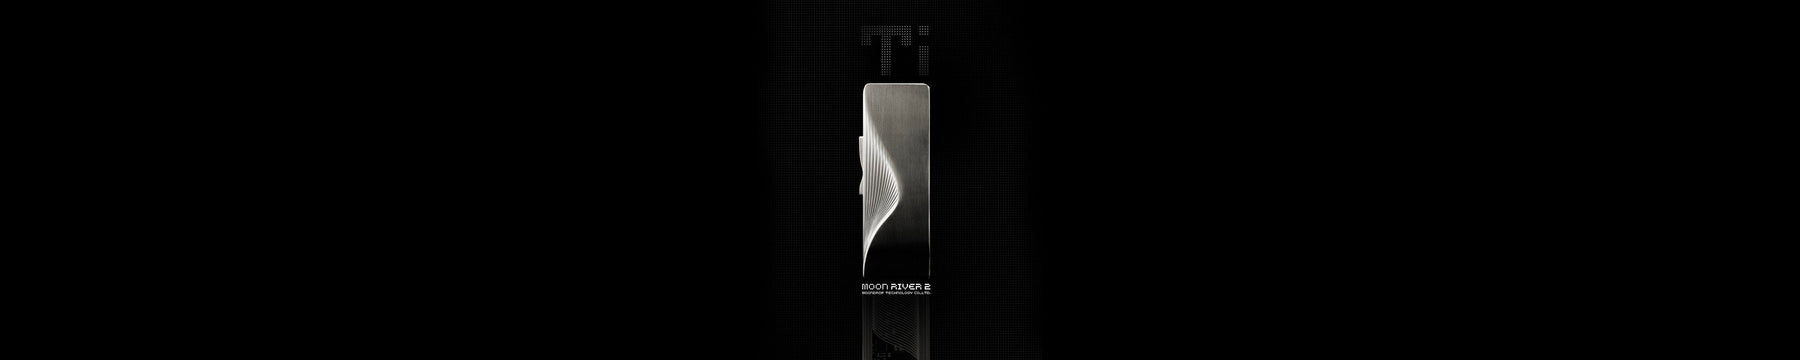 Moondrop Moonriver 2 Ti Edition: Brand New Titanium Alloy USB DAC/AMP With Dual CS43198 Chips